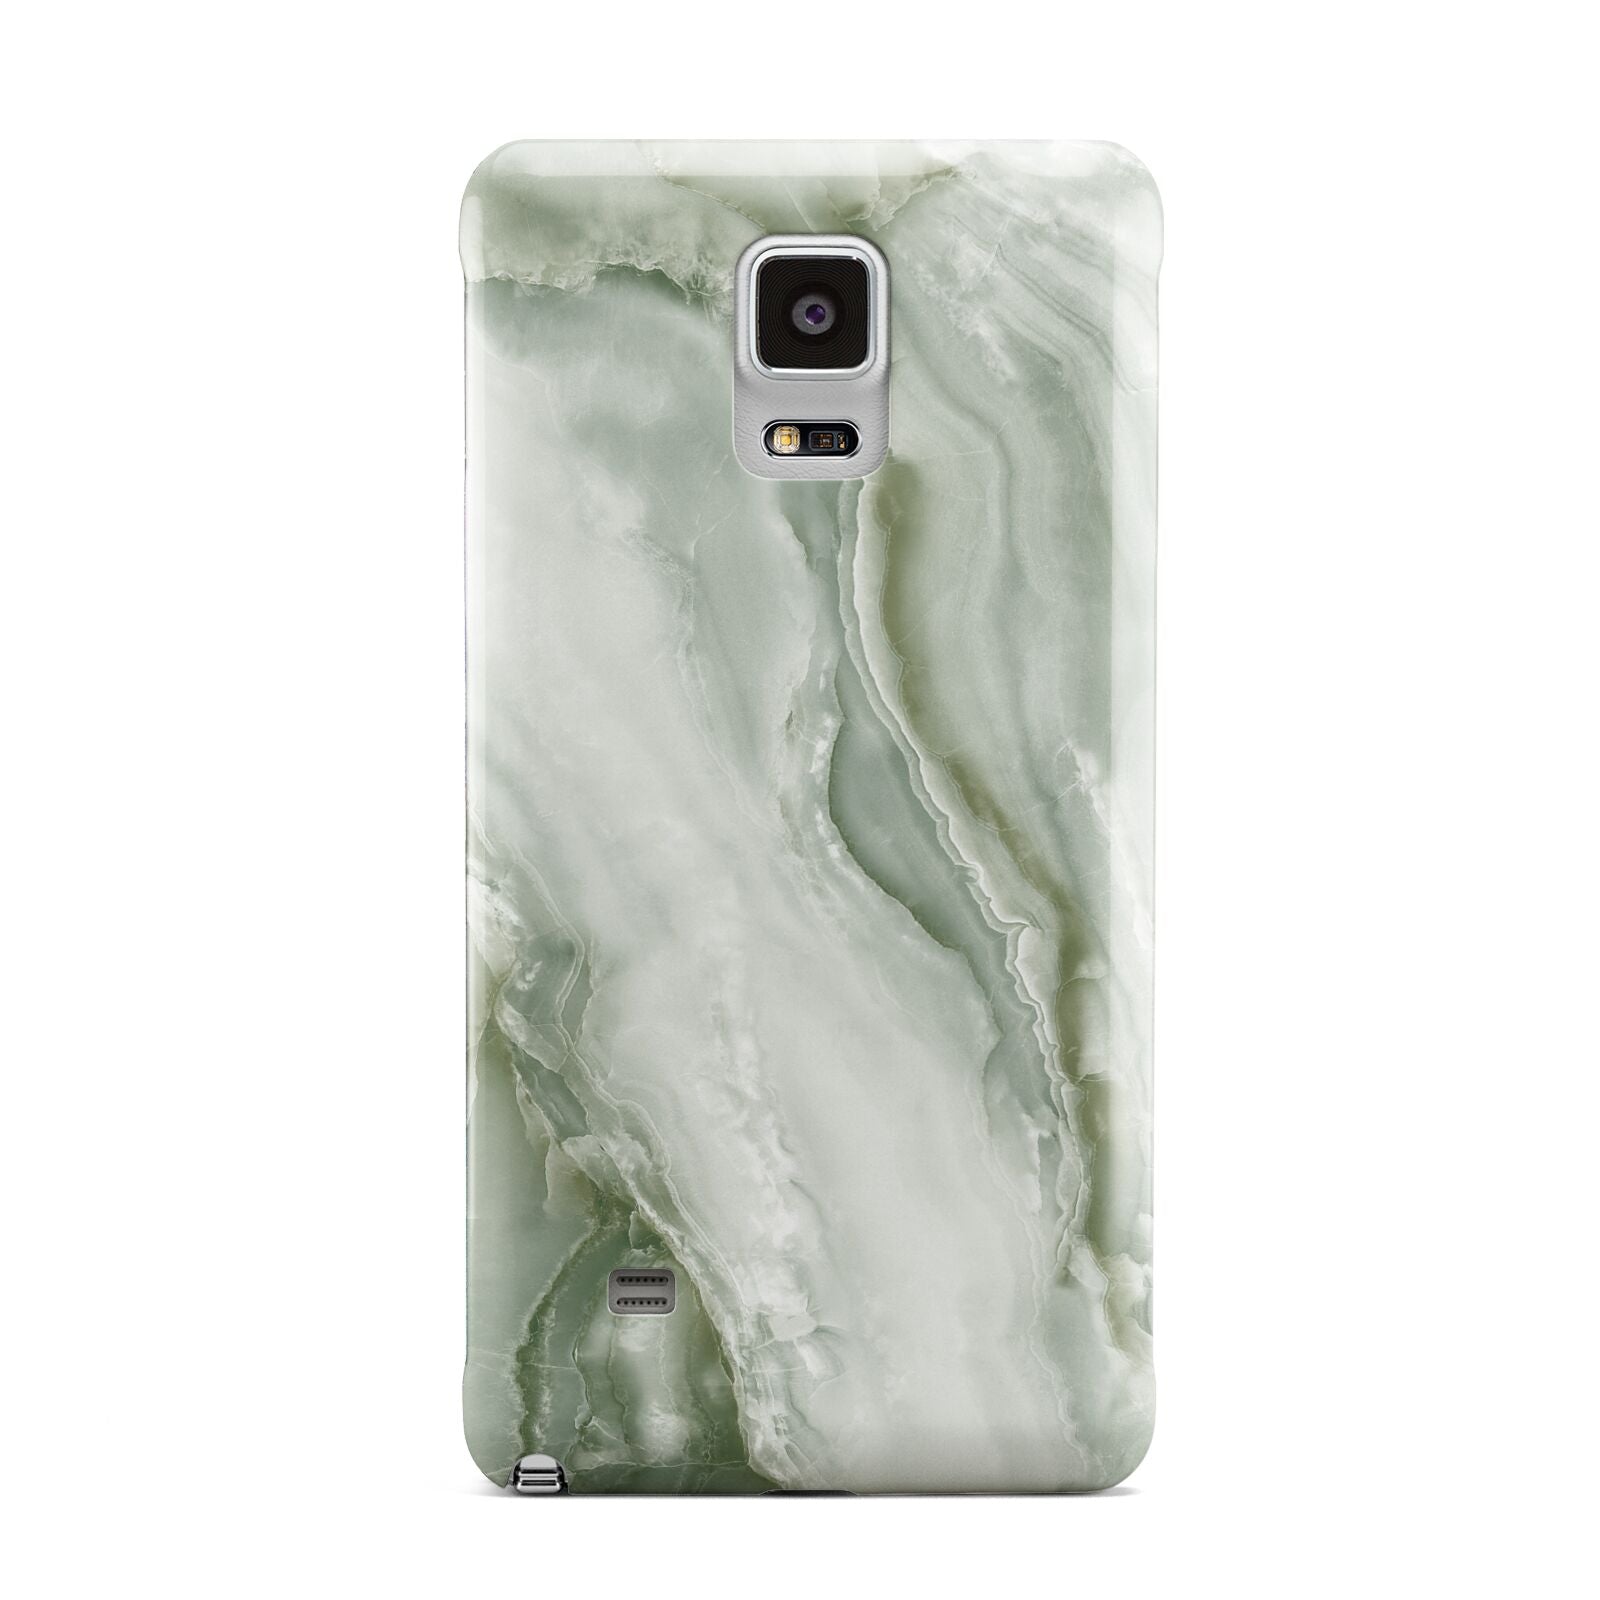 Pistachio Green Marble Samsung Galaxy Note 4 Case